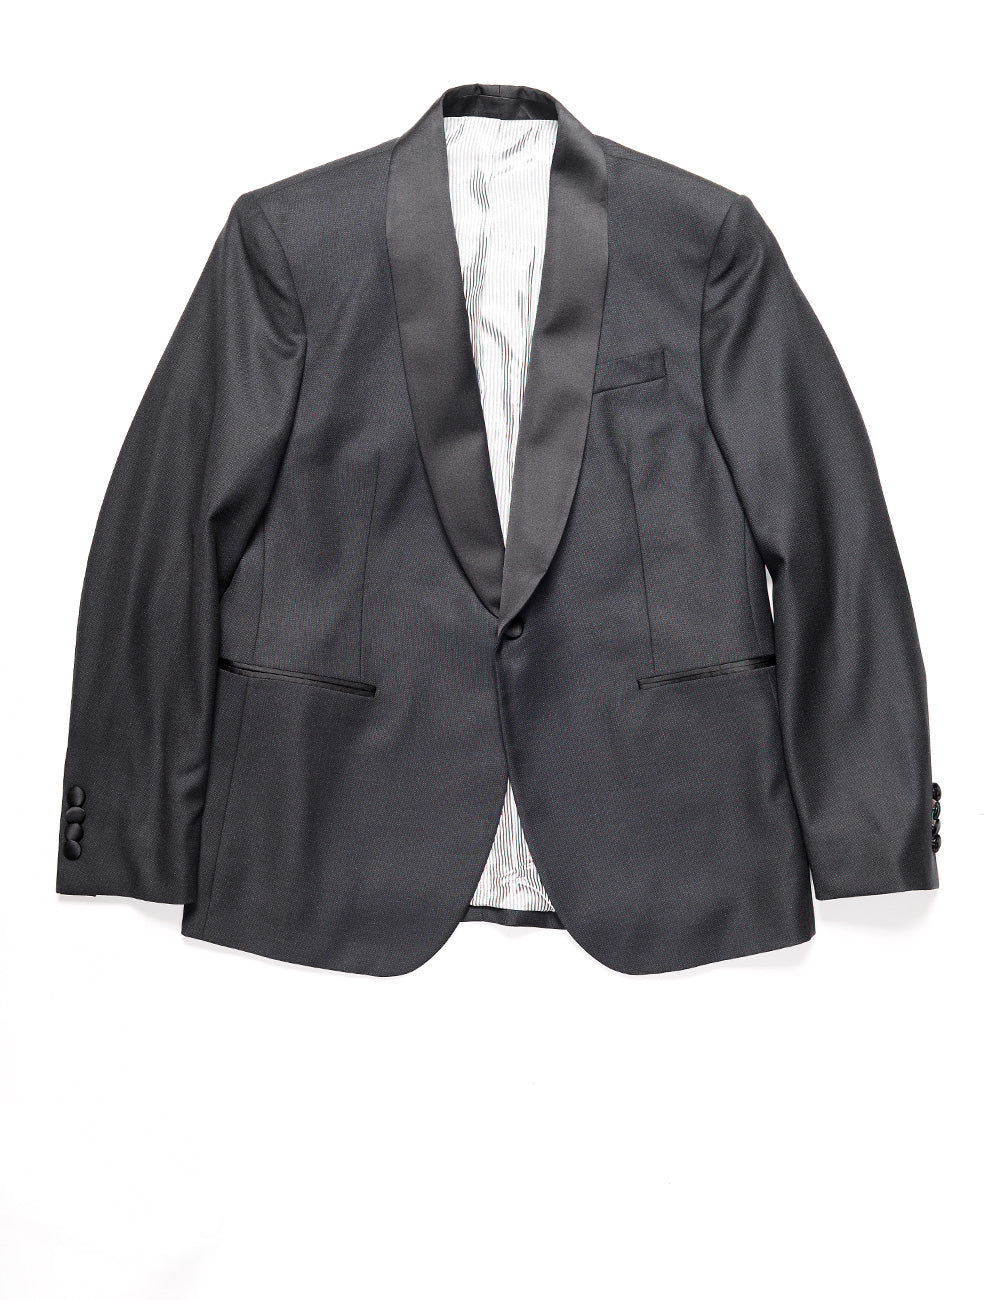 BKT50 Shawl Collar Tuxedo Jacket in Tonal Birdseye - Black with